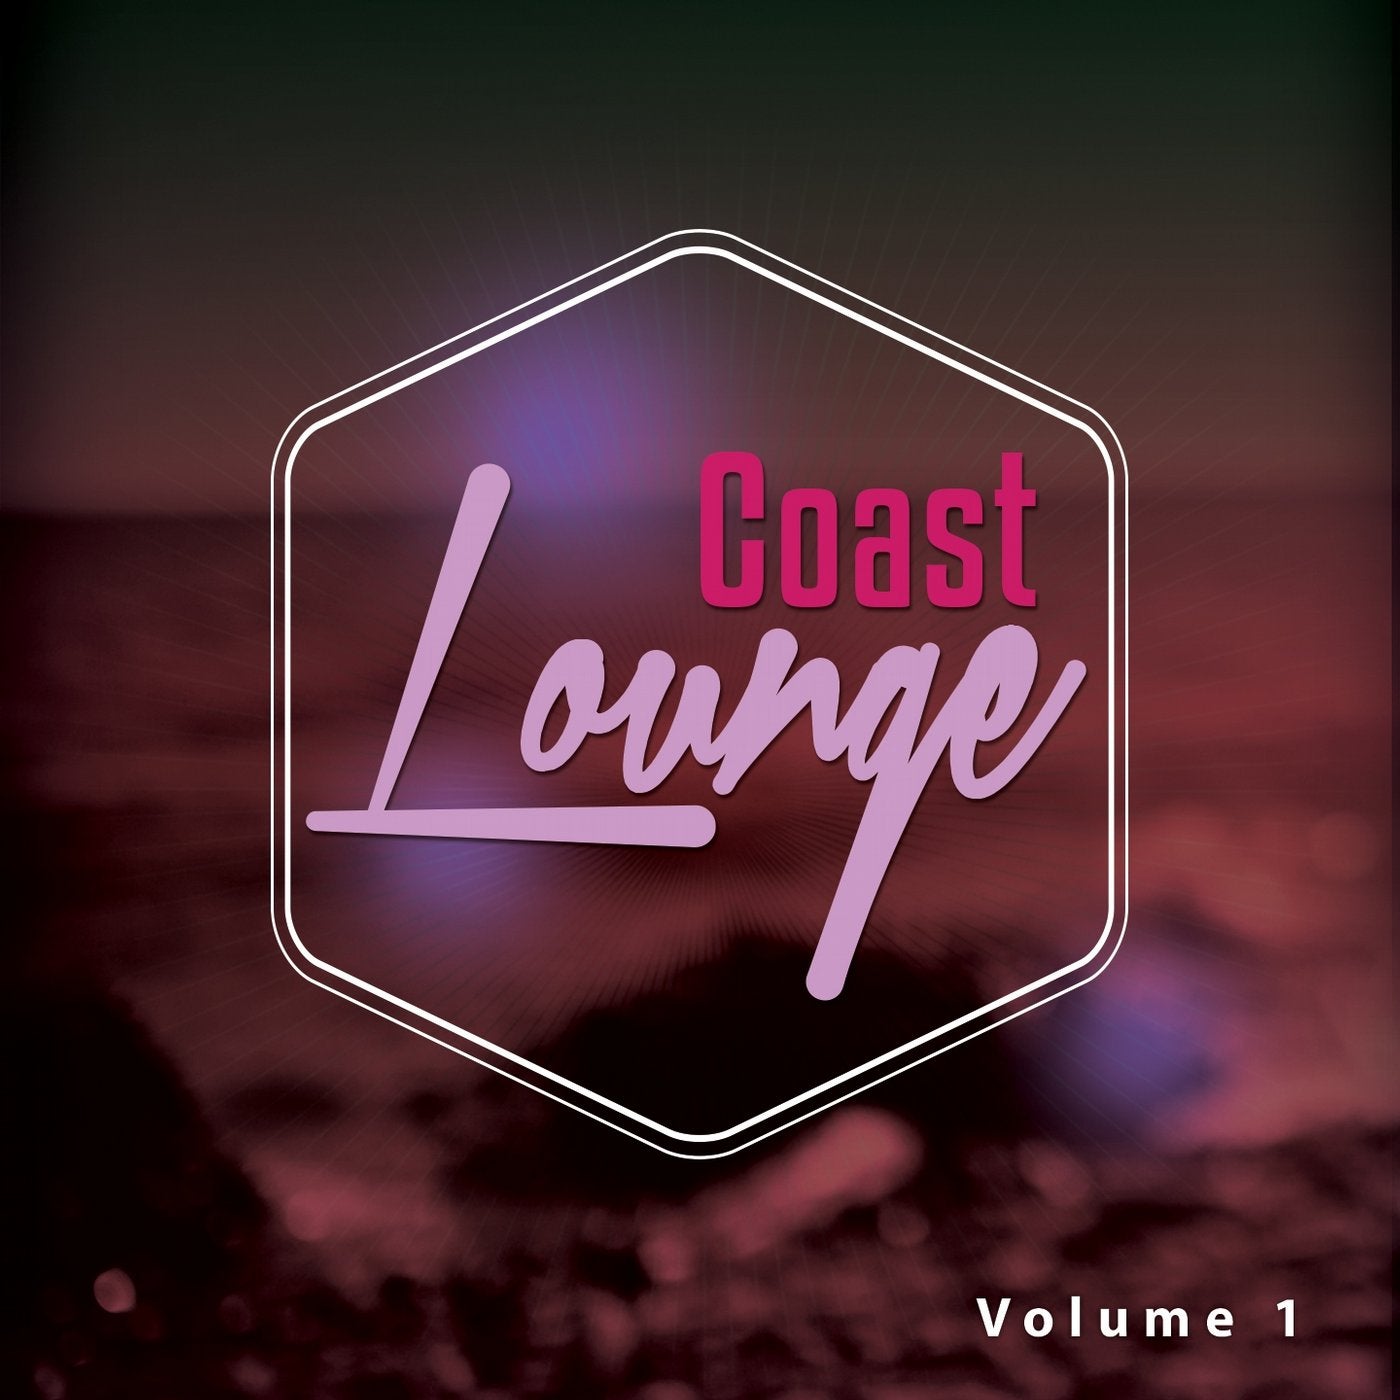 Coast Lounge, Vol. 1